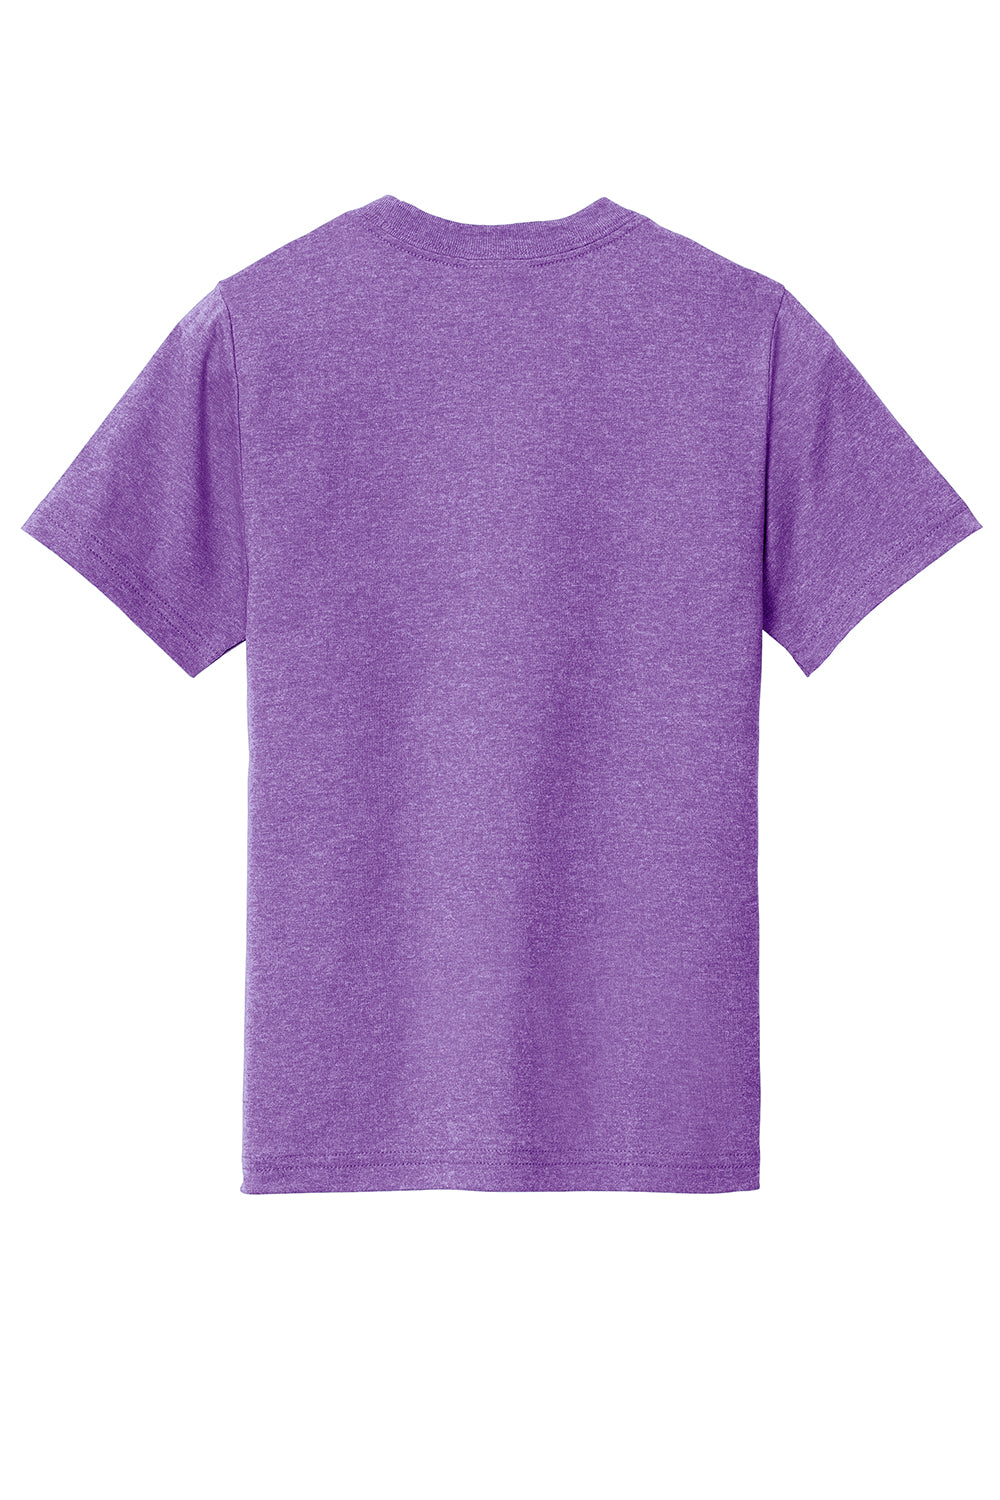 Port & Company PC330Y Youth Short Sleeve Crewneck T-Shirt Heather Team Purple Flat Back